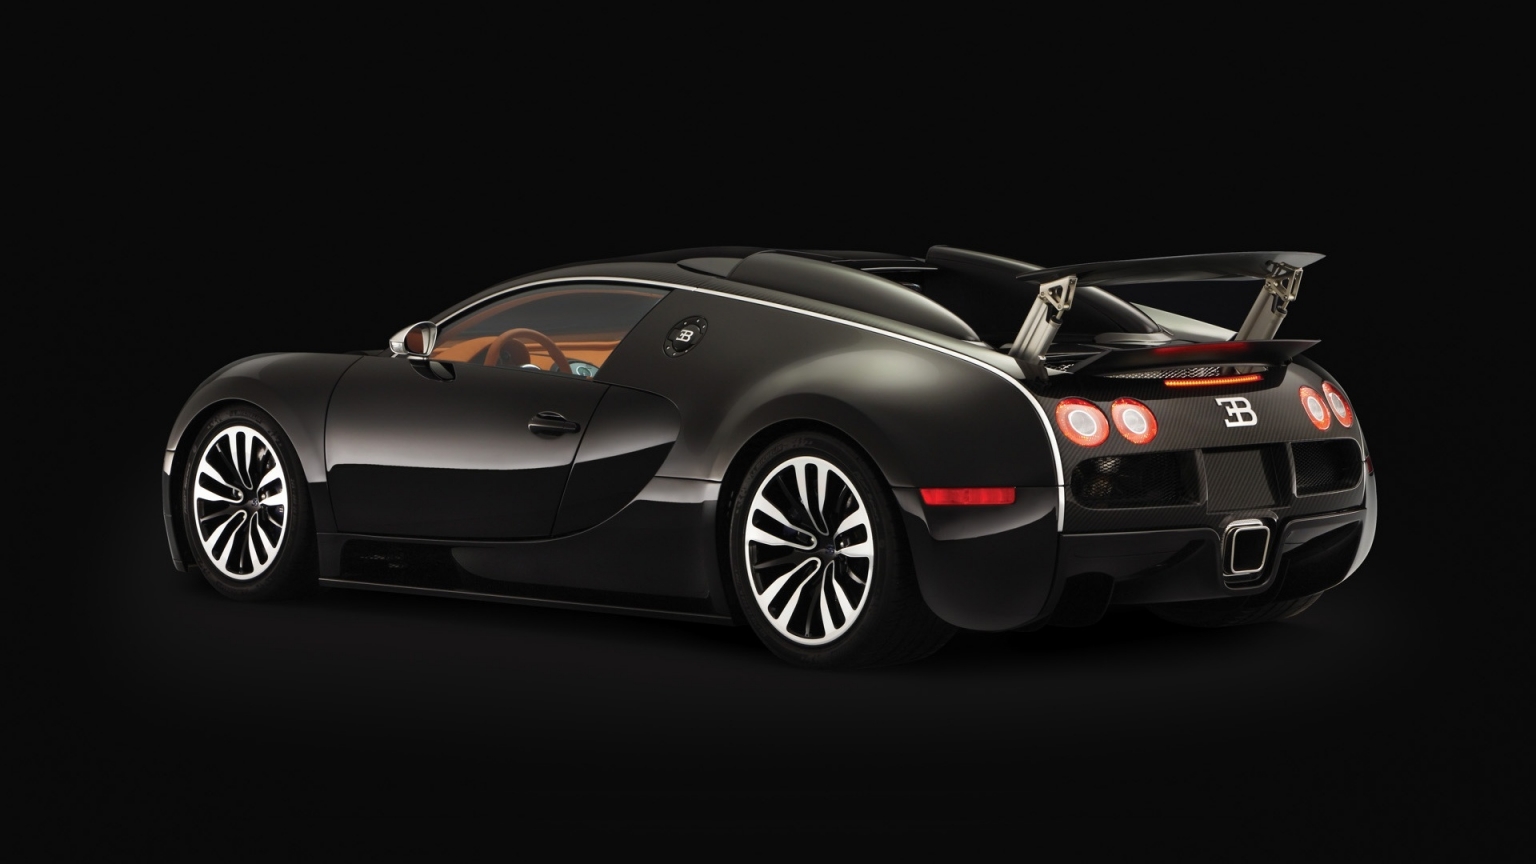 Bugatti Veyron Sang Noir 2008 - Rear Angle for 1536 x 864 HDTV resolution